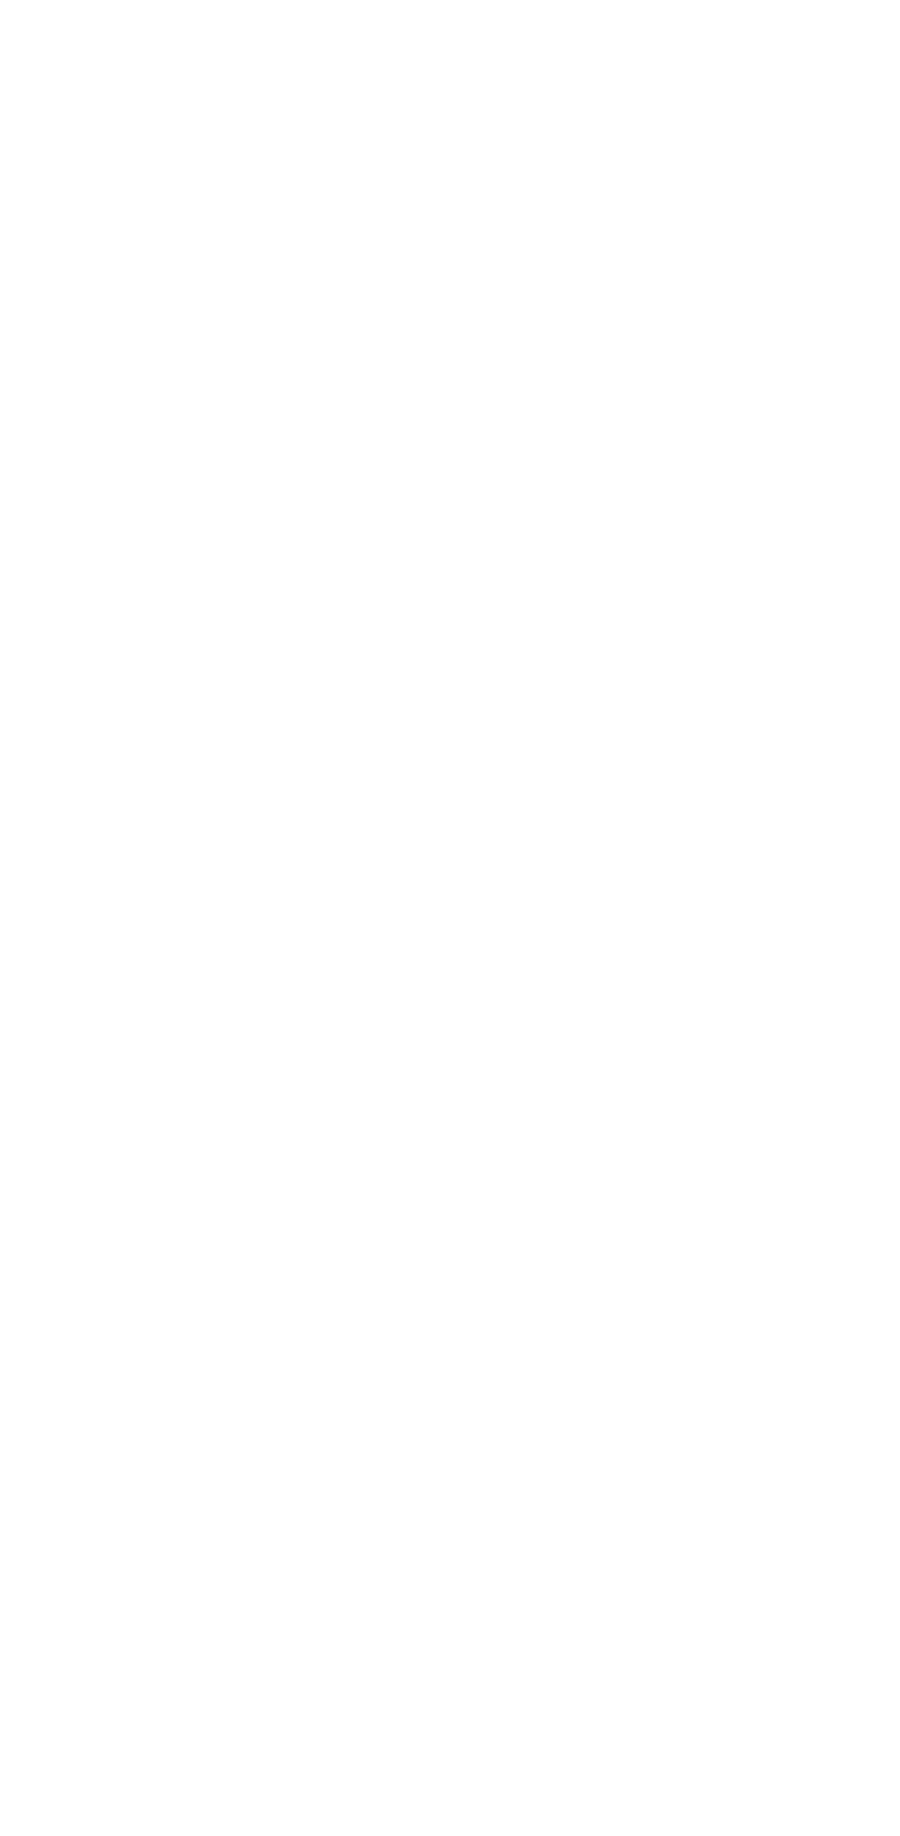 Asia Pacific Cultural Center logo in white